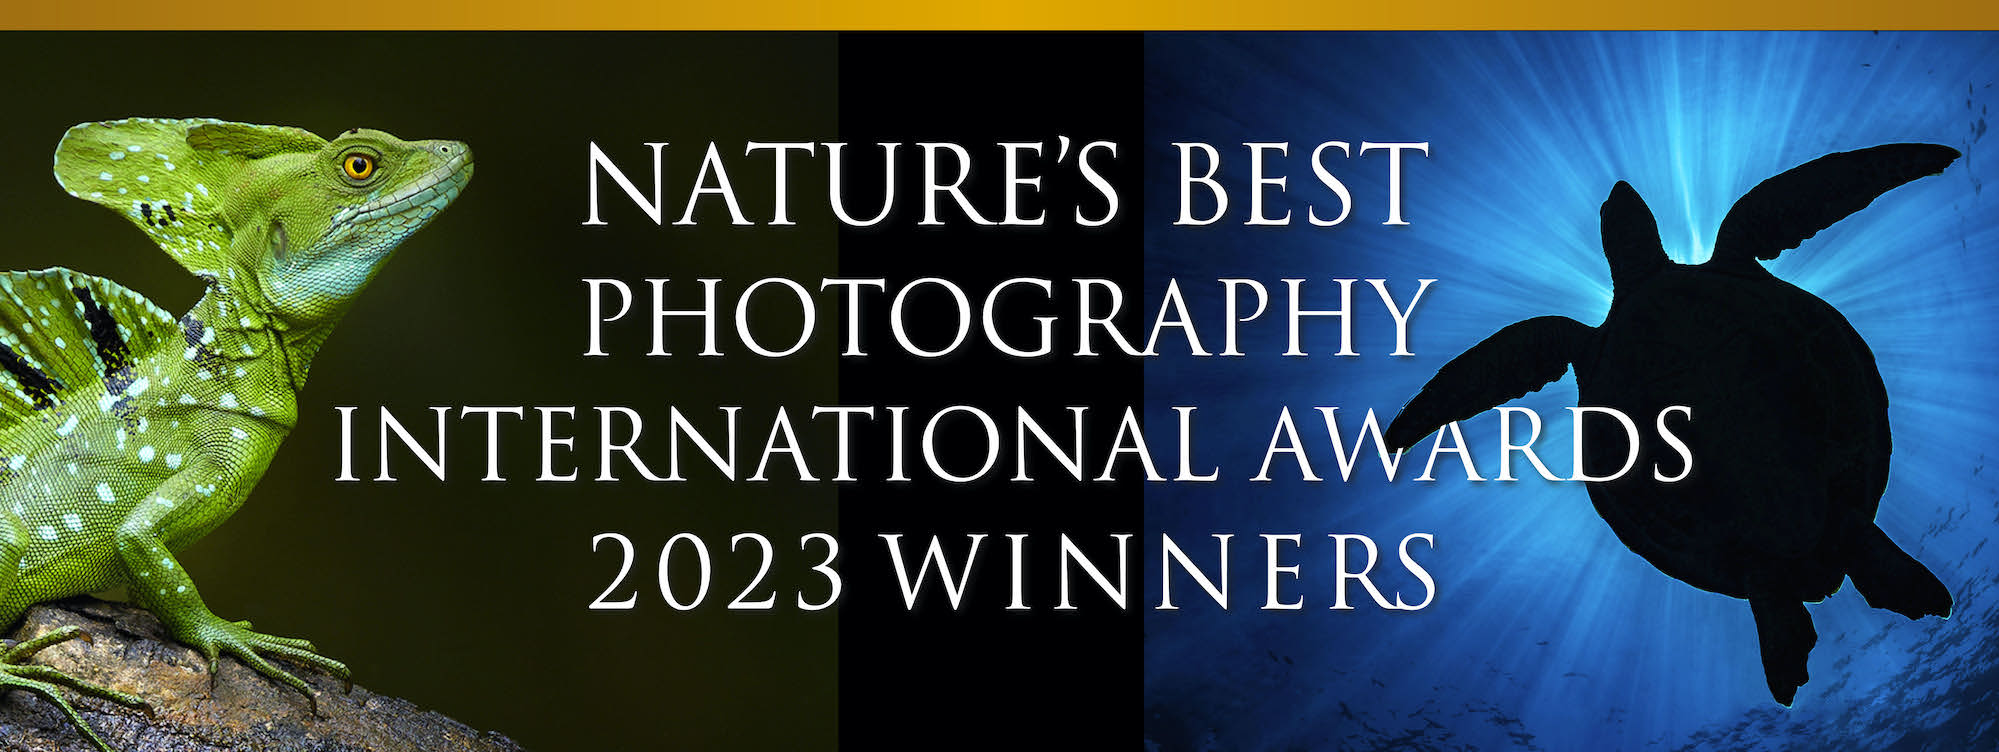 Bature's Best Photography Awards